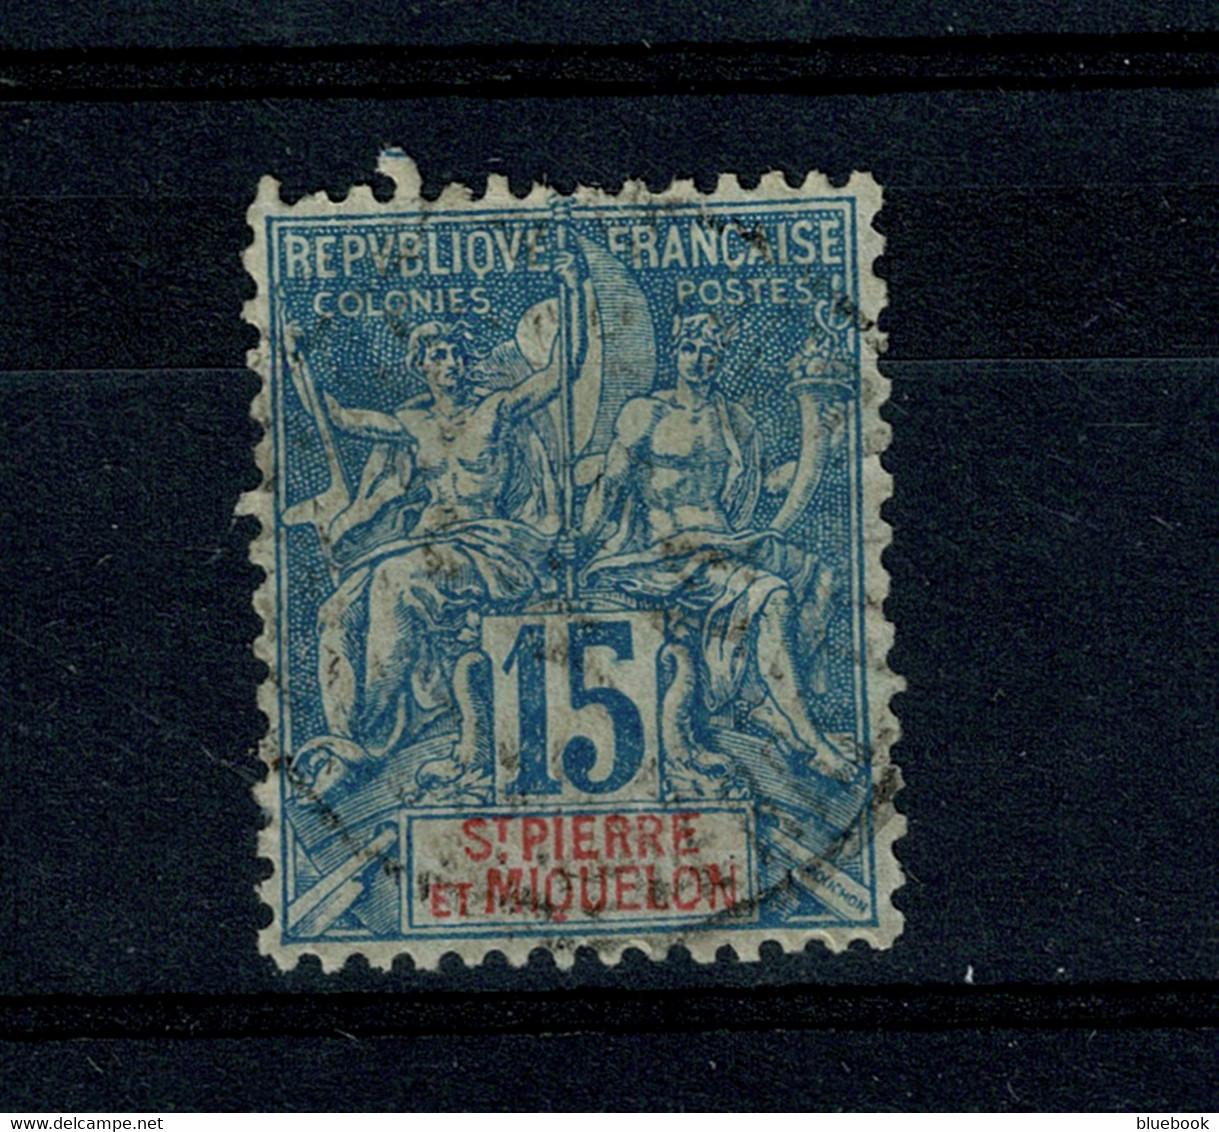 Ref 1458 - 1892 St Pierre Et Miquelon France Colony - 15c Used Stamp - SG 65 - Gebraucht